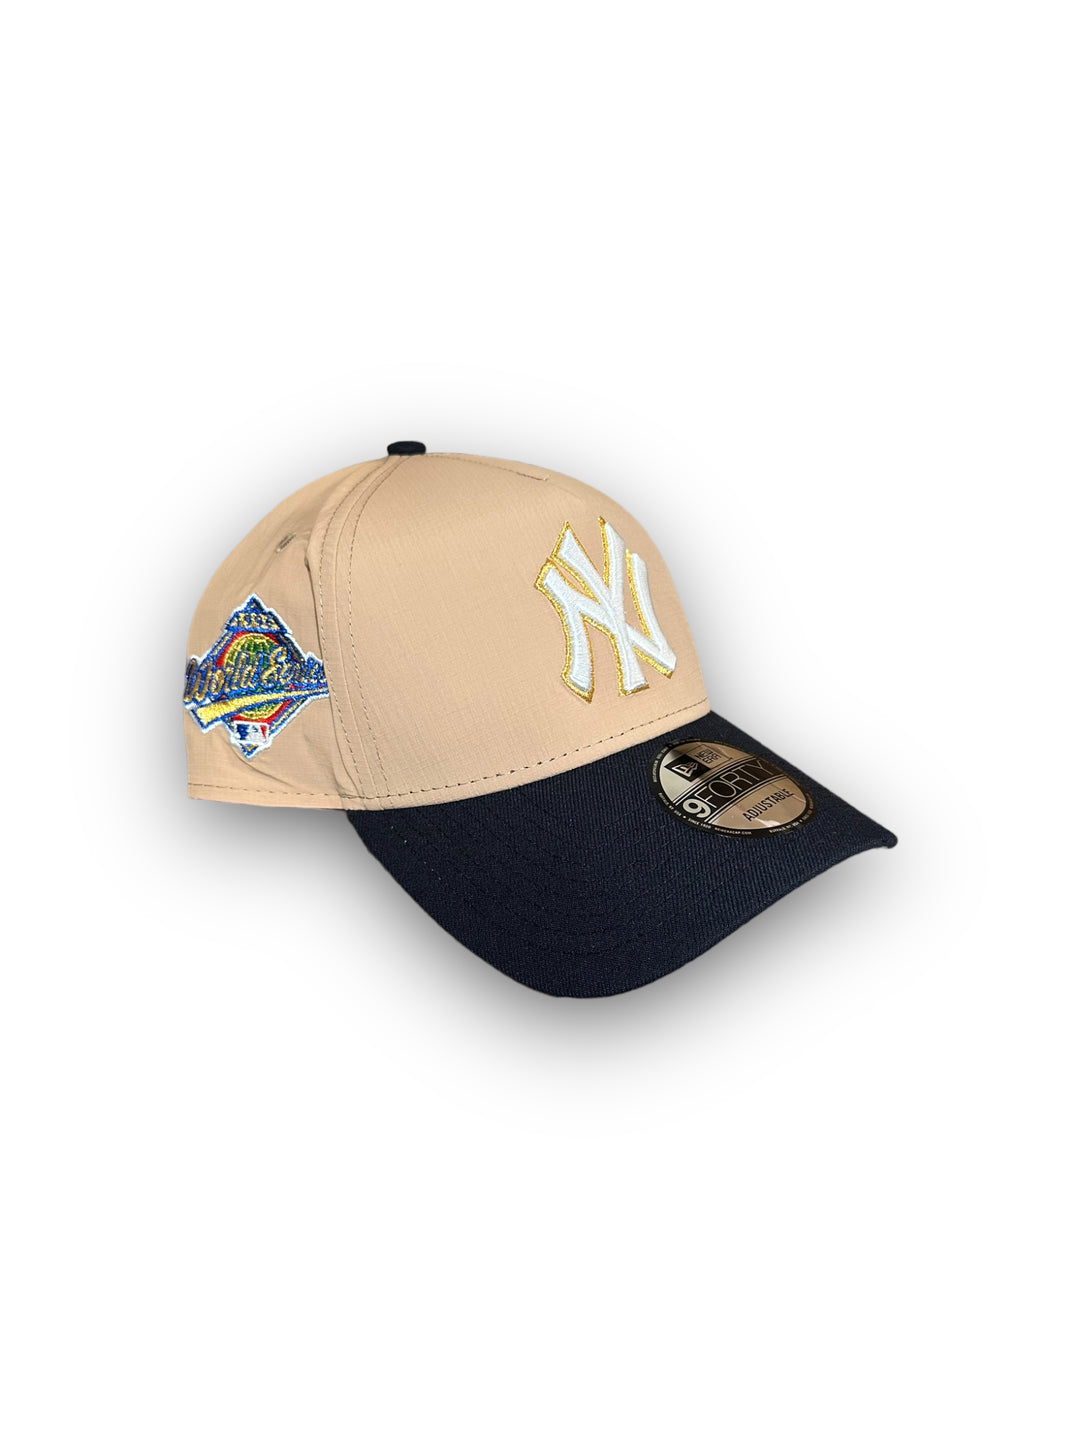 Gorra New York Yankees '96 WS color canela/nvy